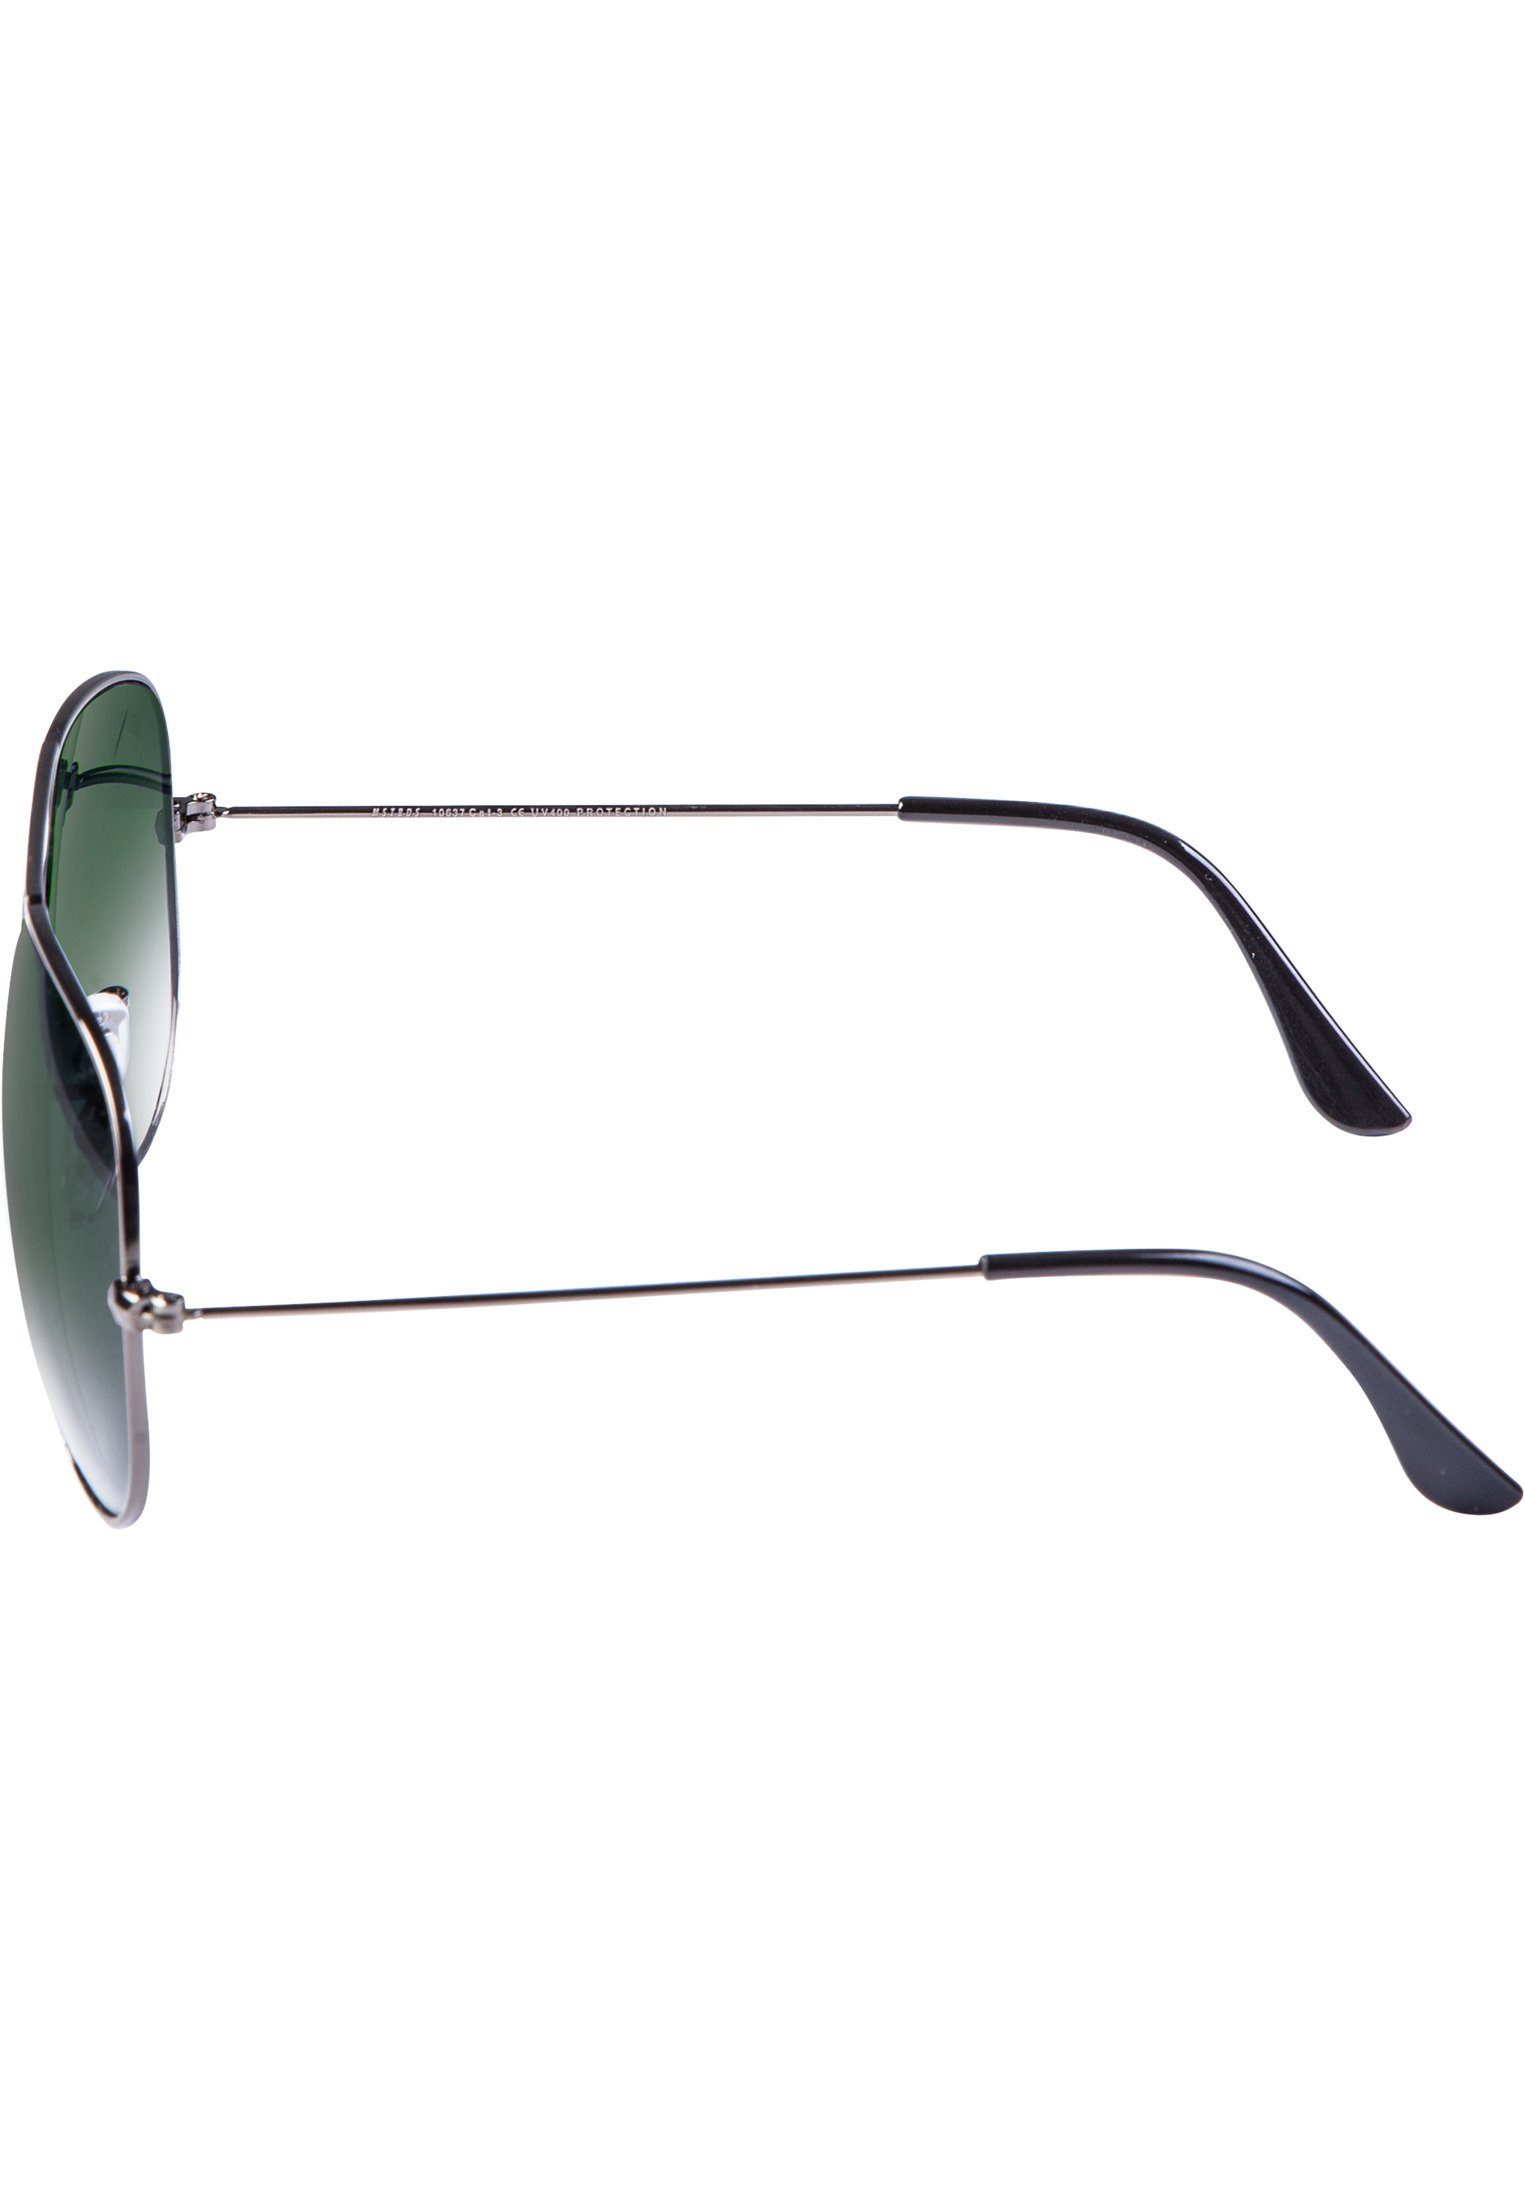 MSTRDS Sonnenbrille Accessoires PureAv gun/green Sunglasses Youth